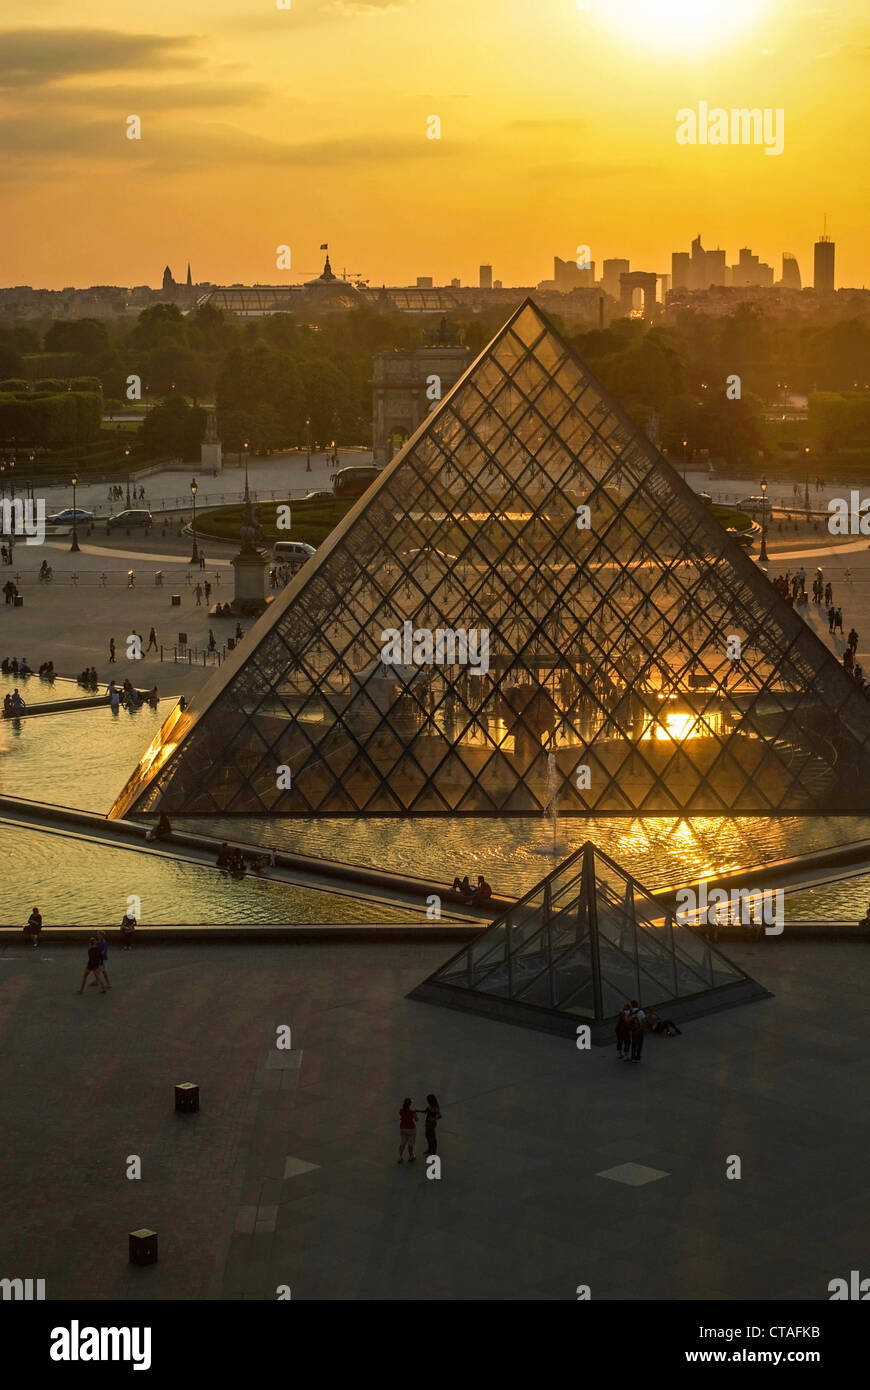 Die Pyramide des Louvre in Paris Stockfoto